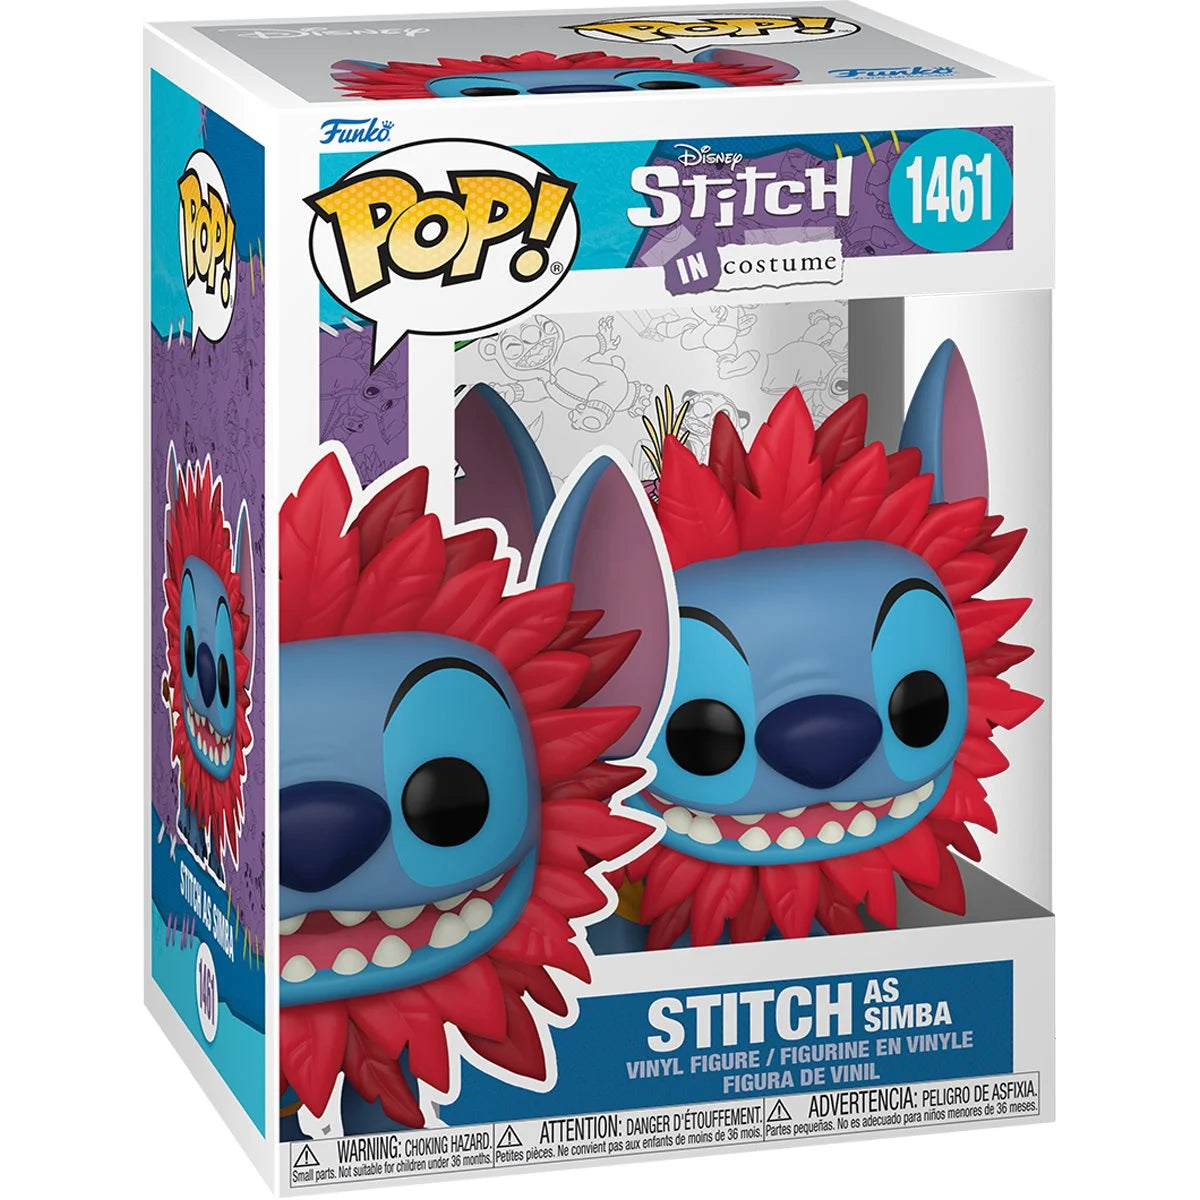 Funko Pop! Lilo & Stitch - Costume Stitch as Simba